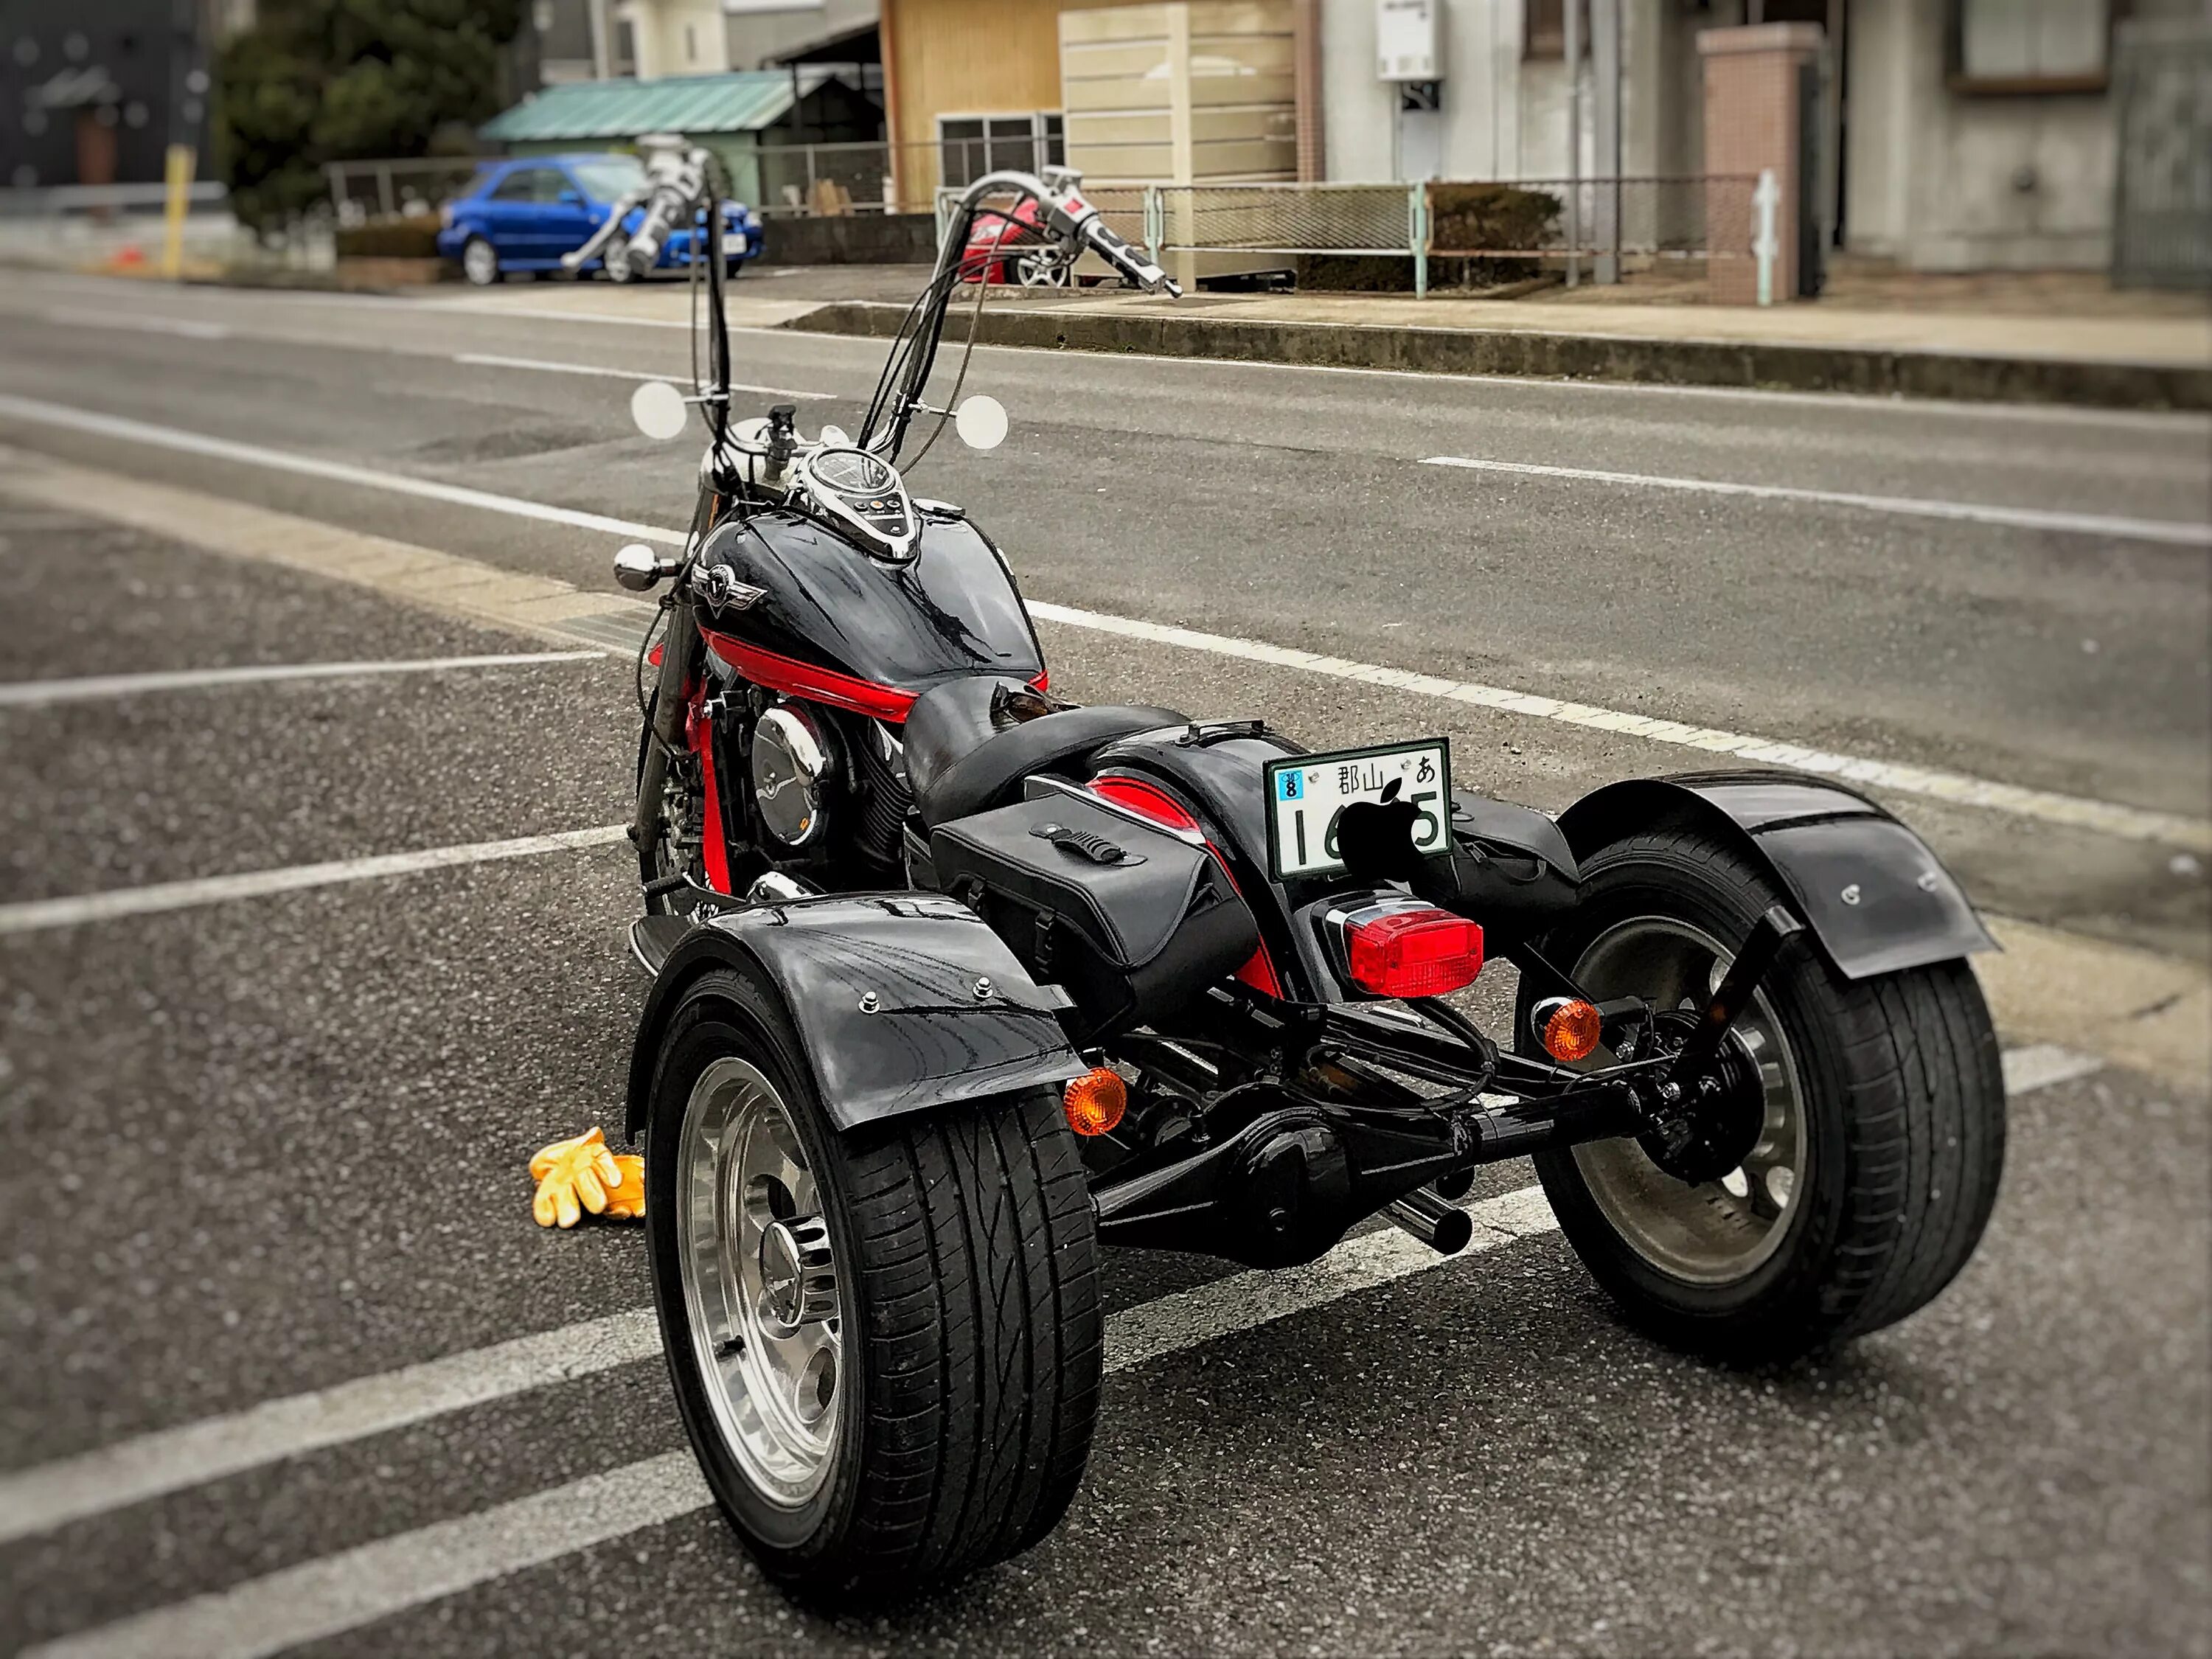 Трехколесный мотоцикл купить. Трайк Trike. Valkyrie Honda 1500 Trike. Атаман трайк. Трёхколёсный трайк.